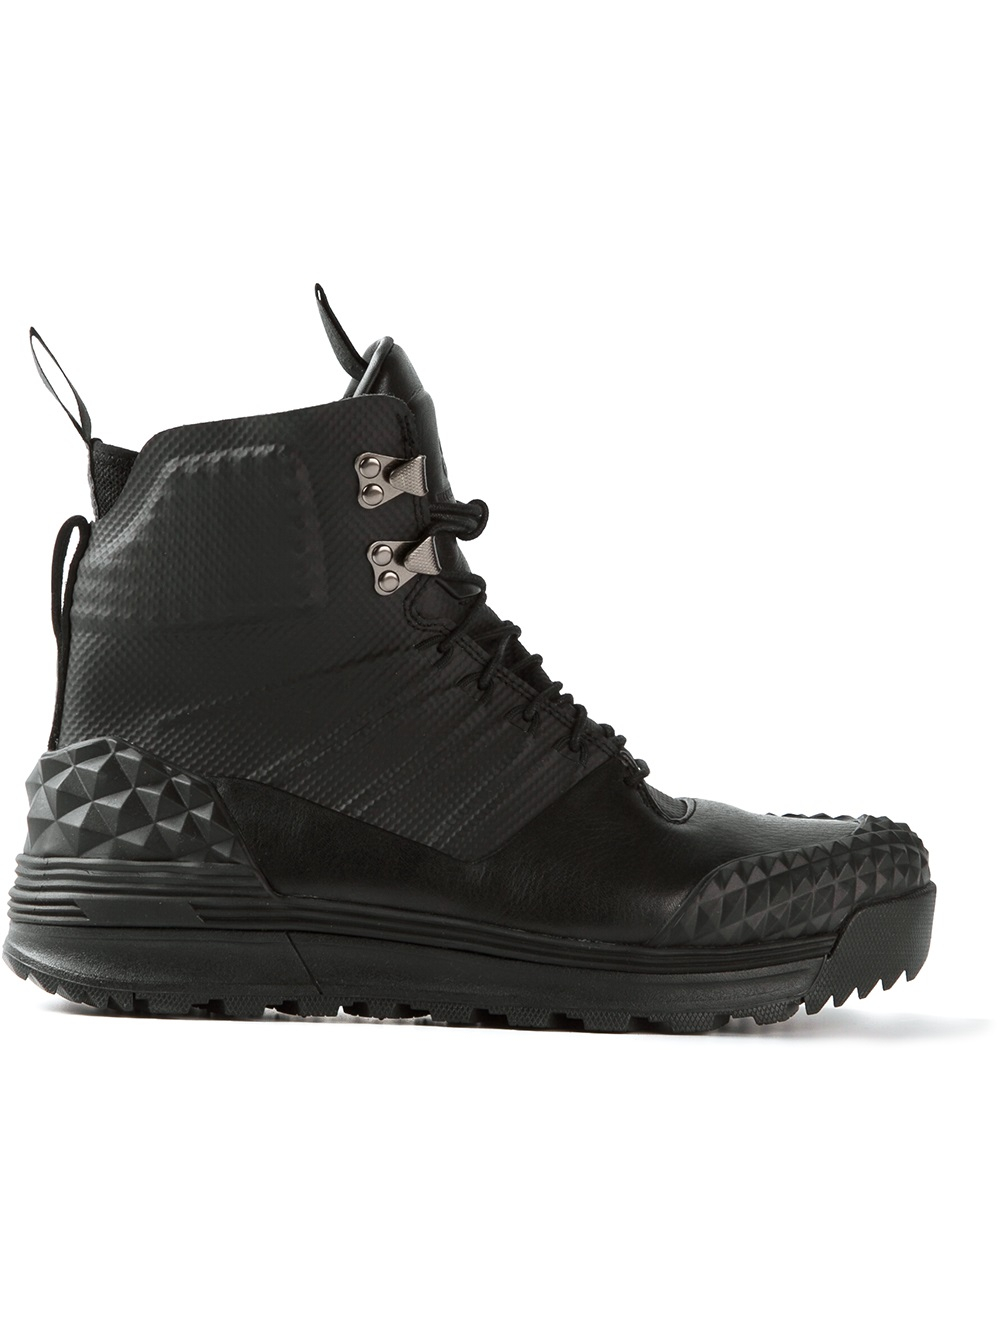 Lyst - Nike Lunar Terra Arktos Boot in Black for Men